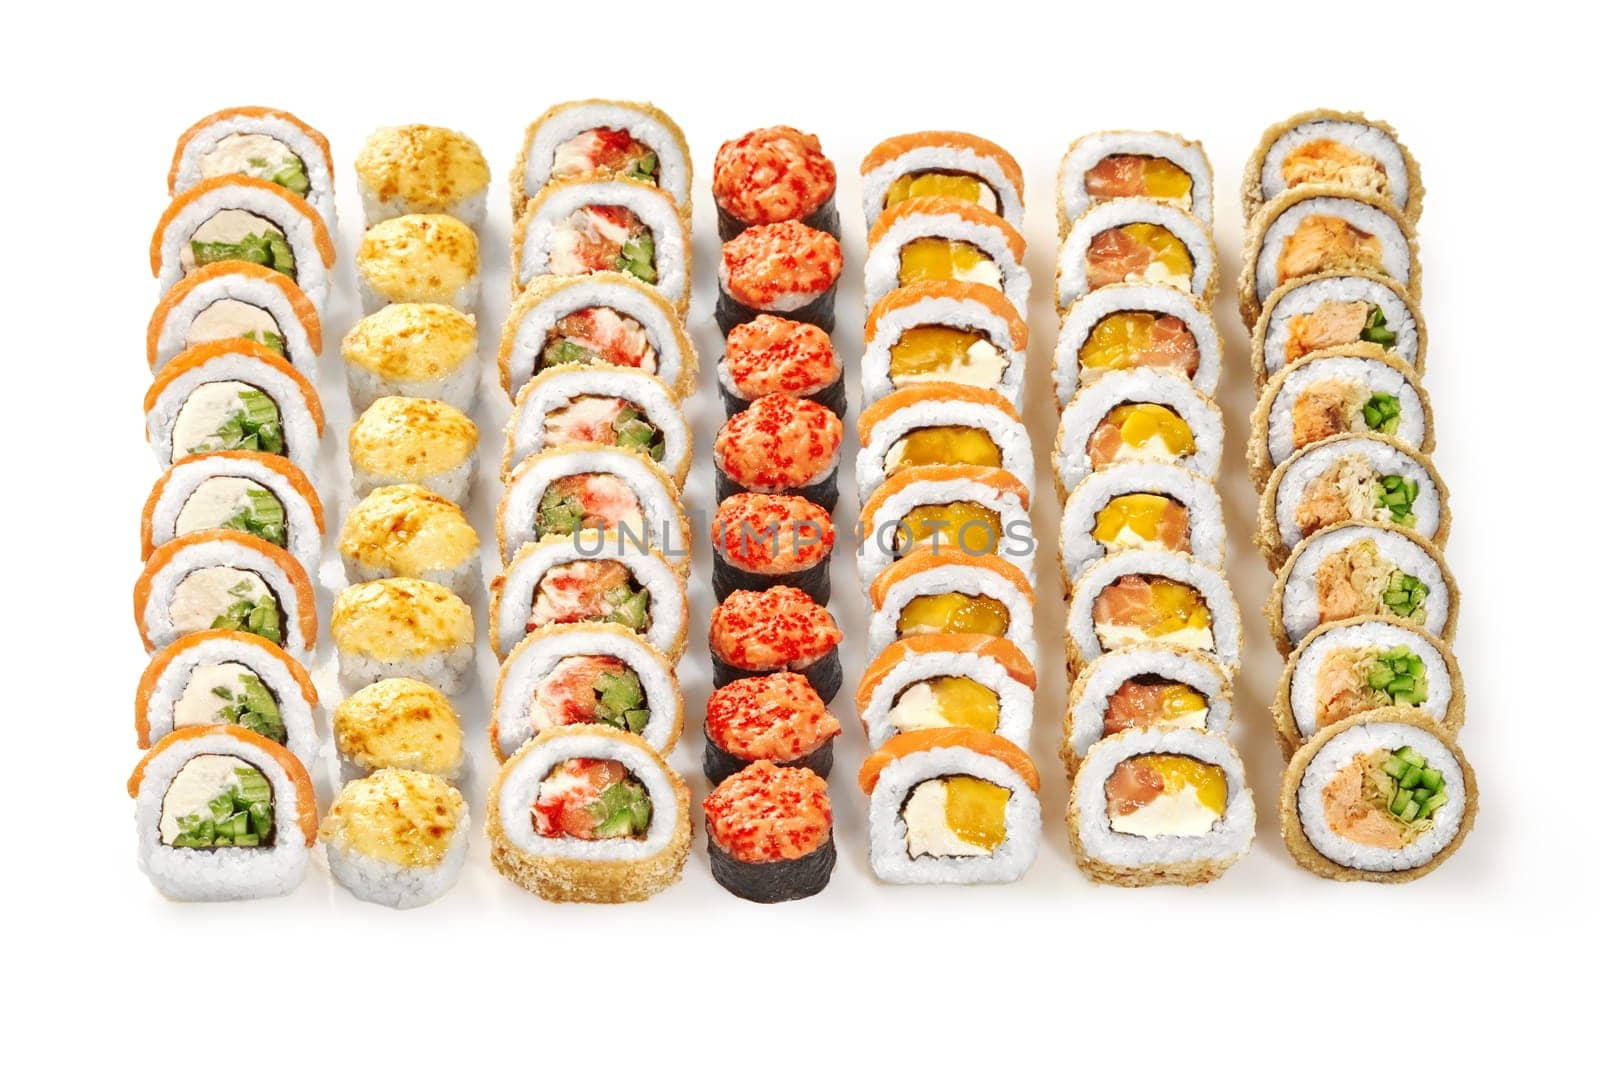 Assorted sushi rolls with tempura, cream cheese, and veggies by nazarovsergey